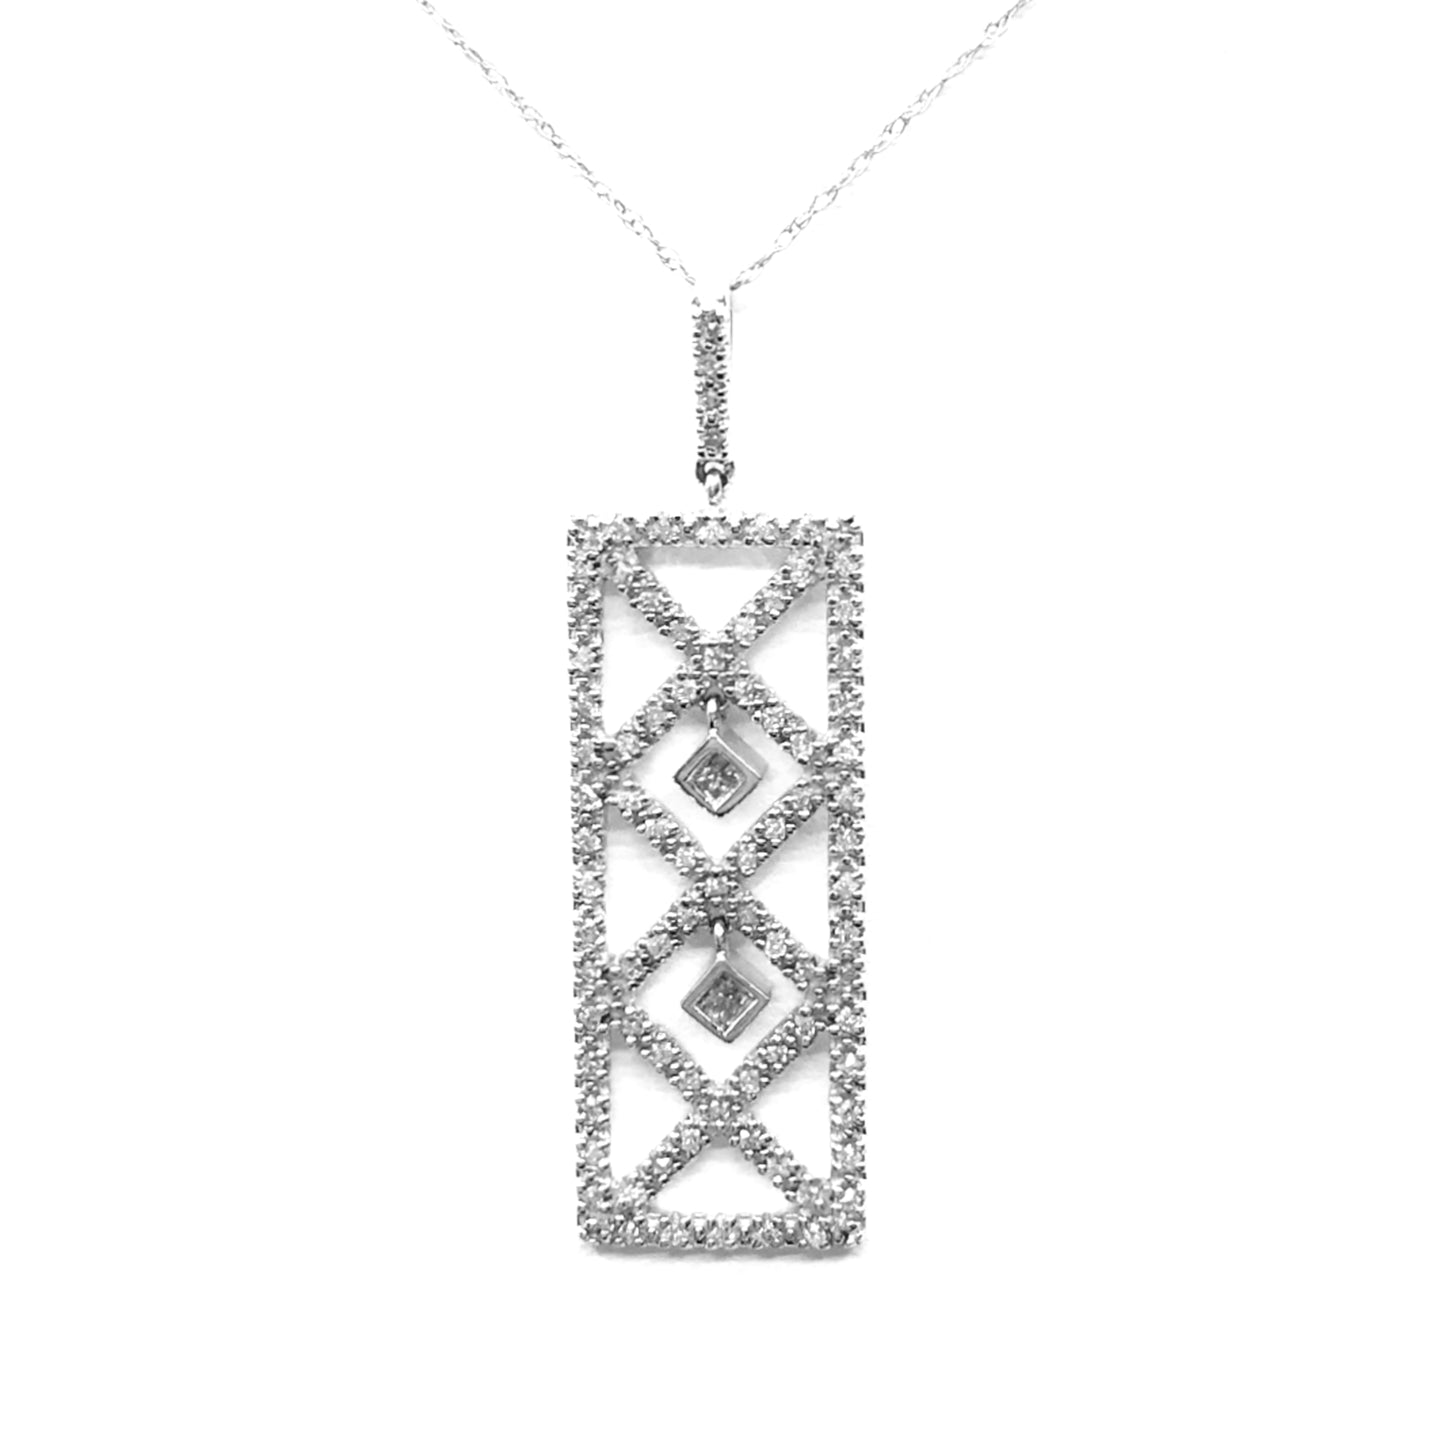 14K White Gold and Diamond Rectangle Pendant Necklace - HK Jewels